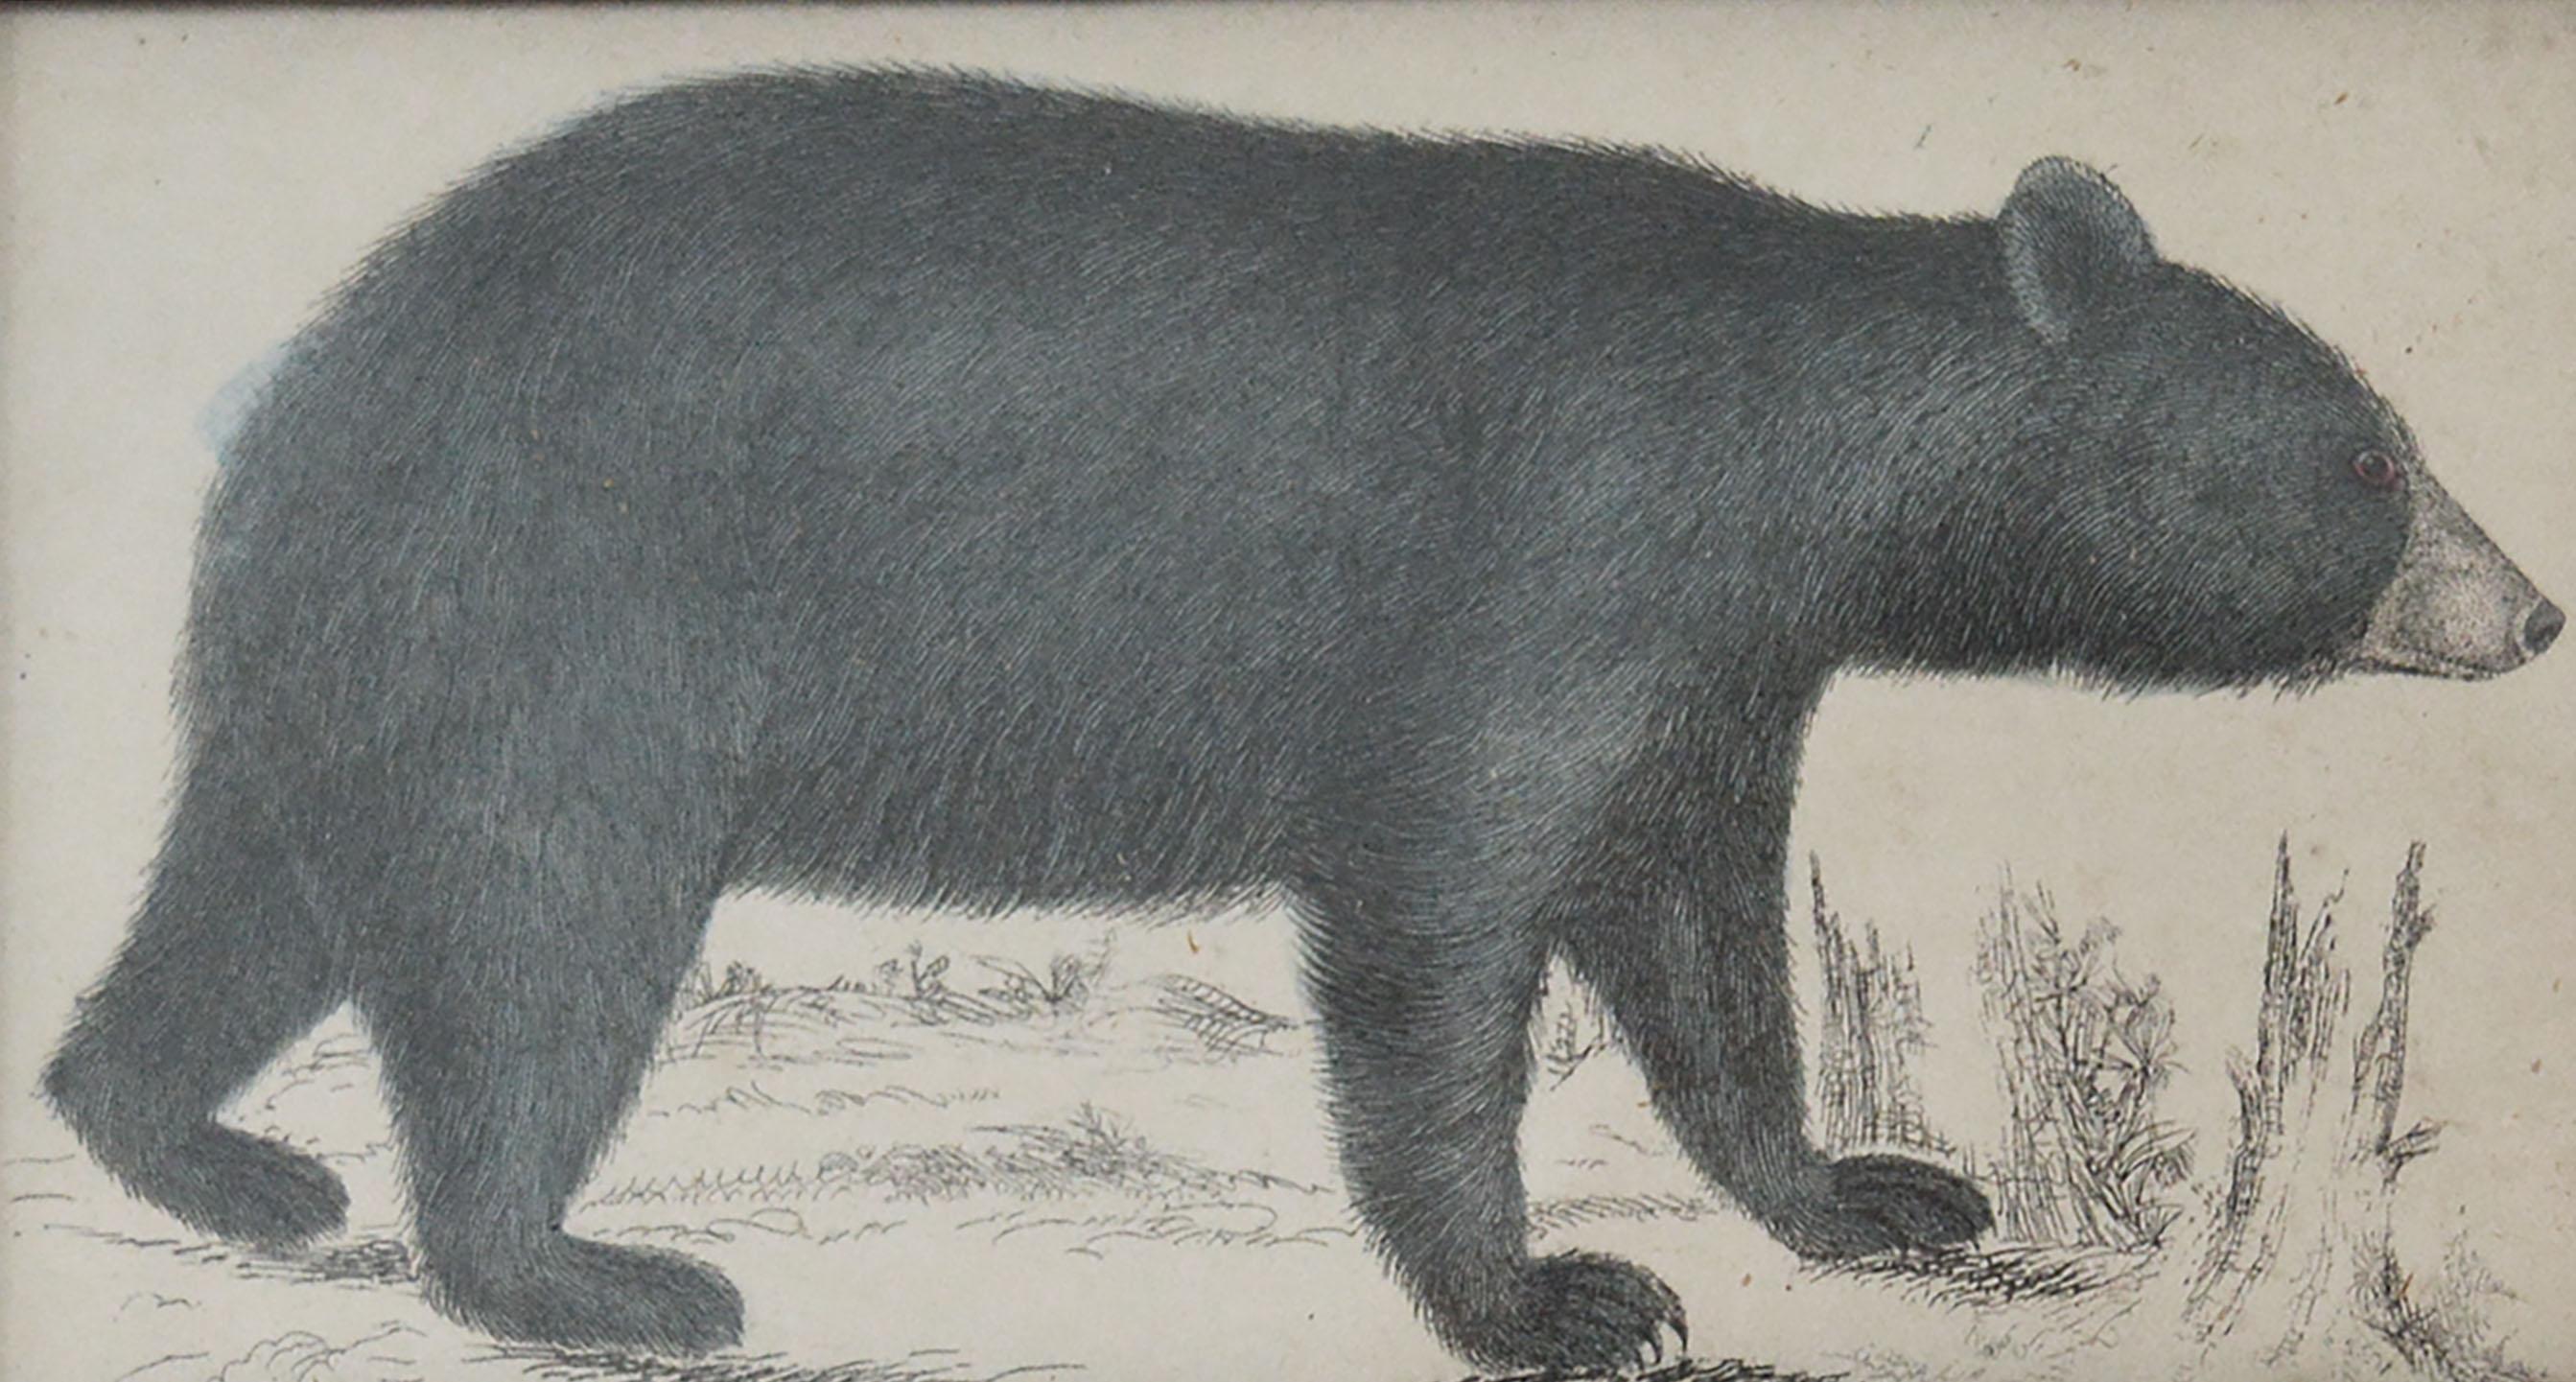 Folk Art Original Antique Print of a Black Bear, 1847